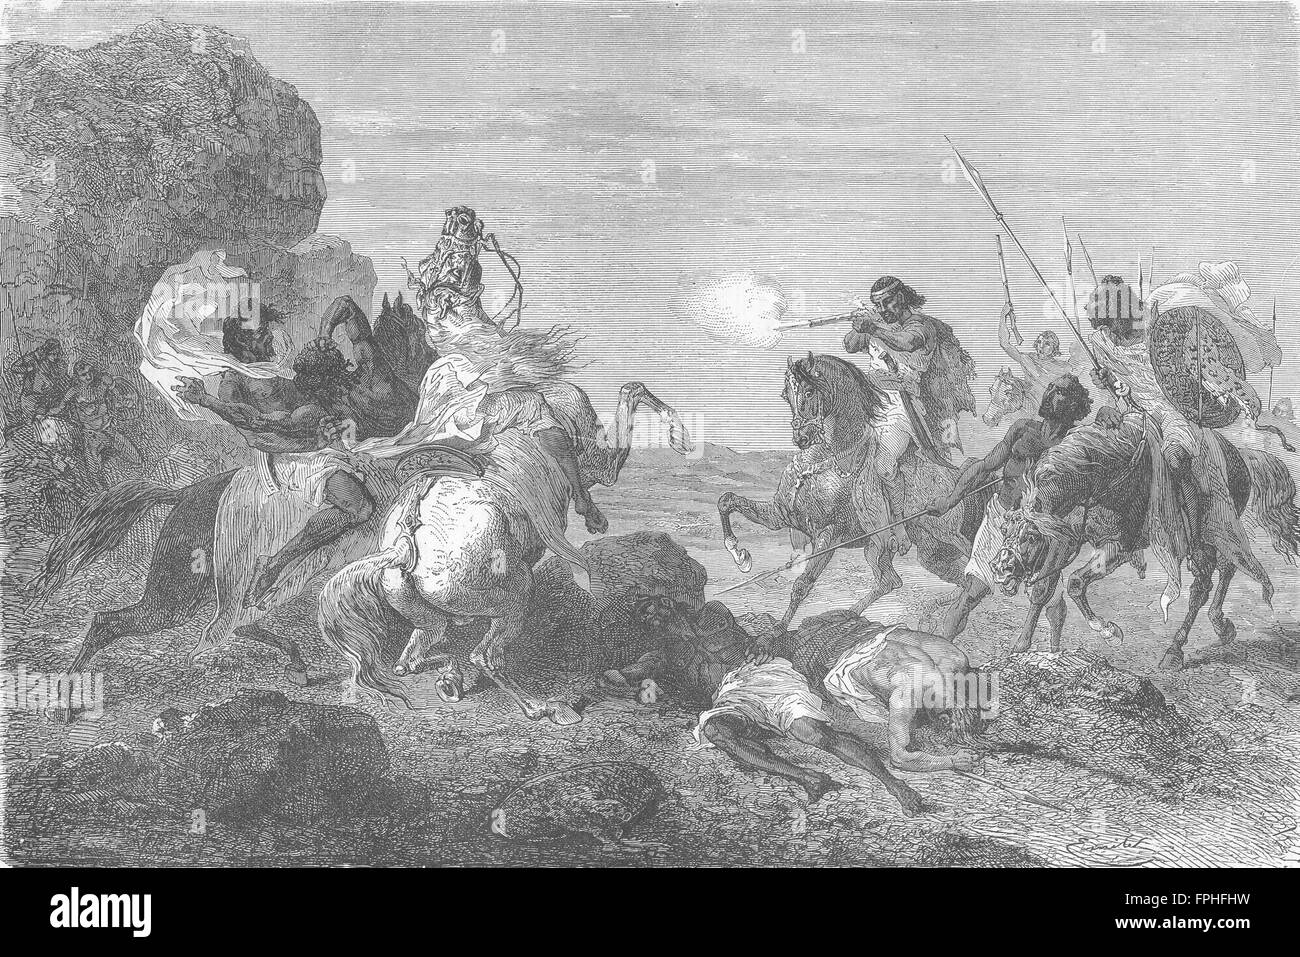 ETHIOPIA: Abyssinian Warfare, antique print 1880 Stock Photo